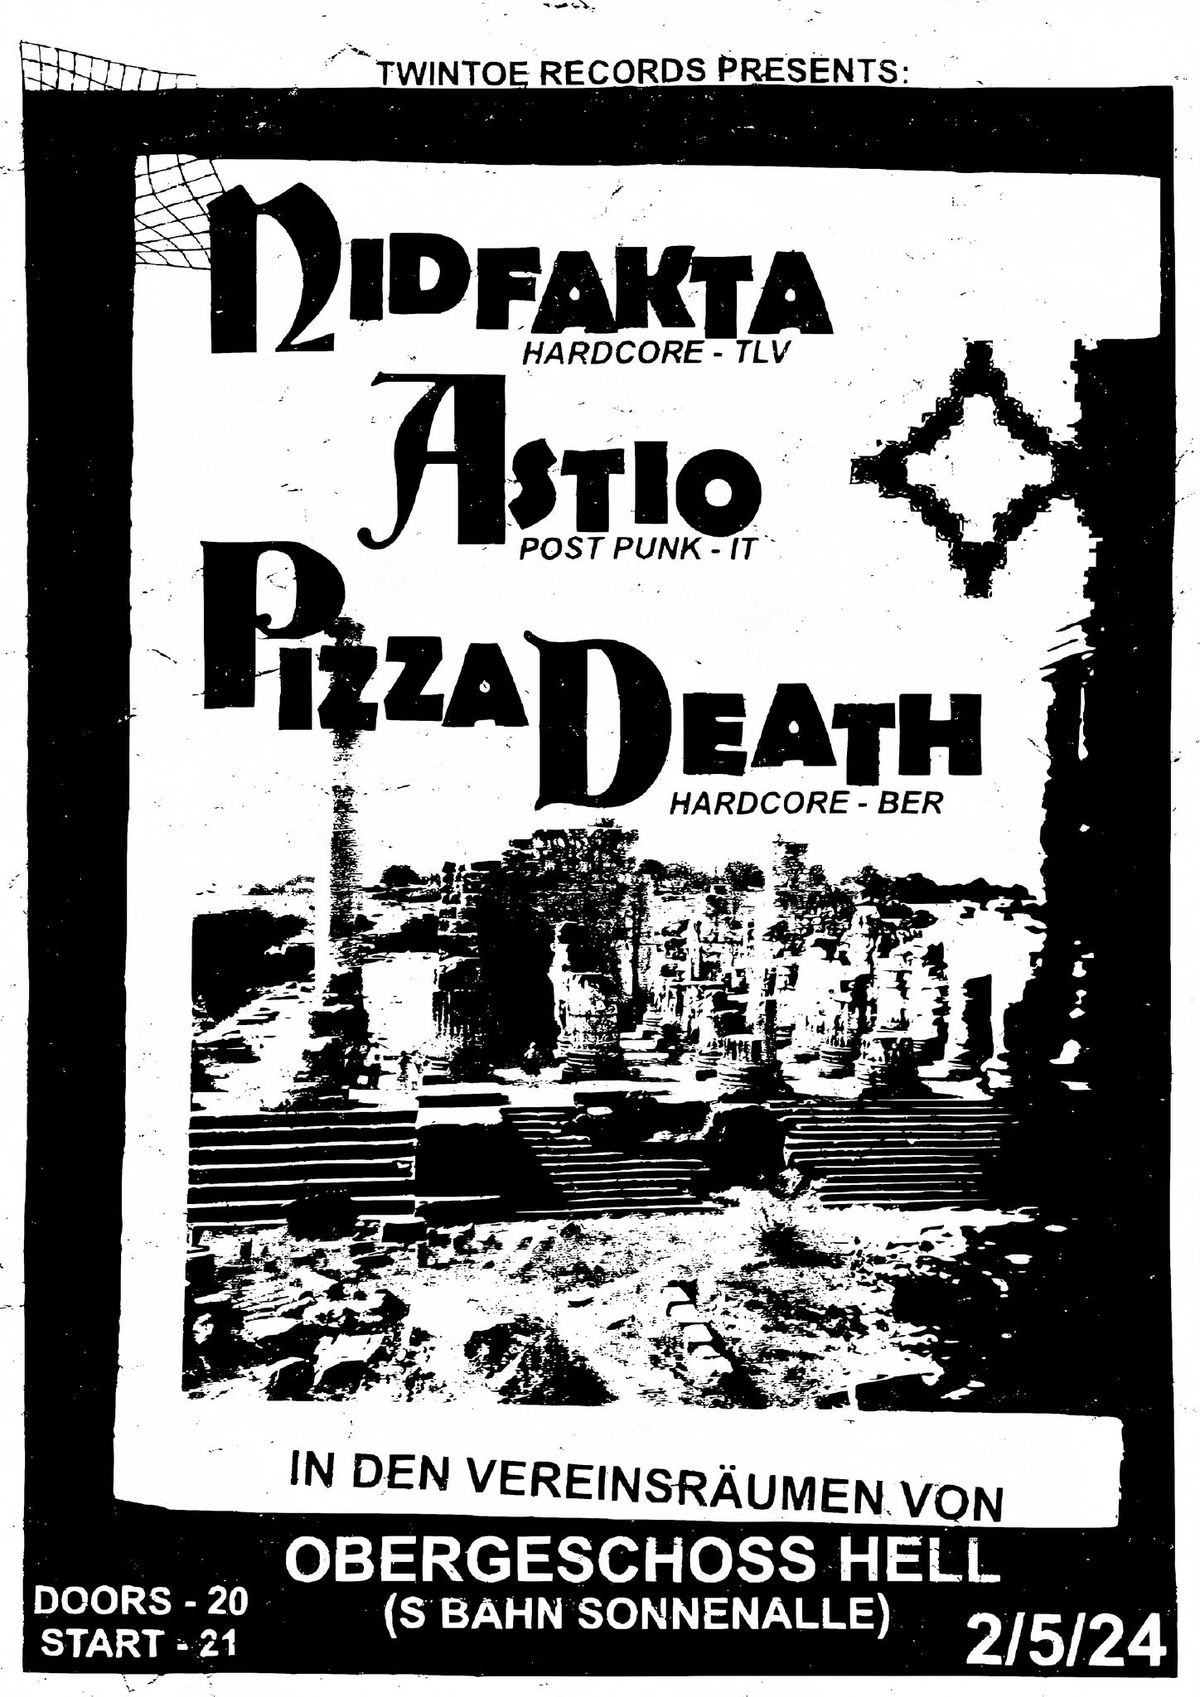 NIDFAKTA (IL) + ASTIO (IT) + PIZZA DEATH (BRL)